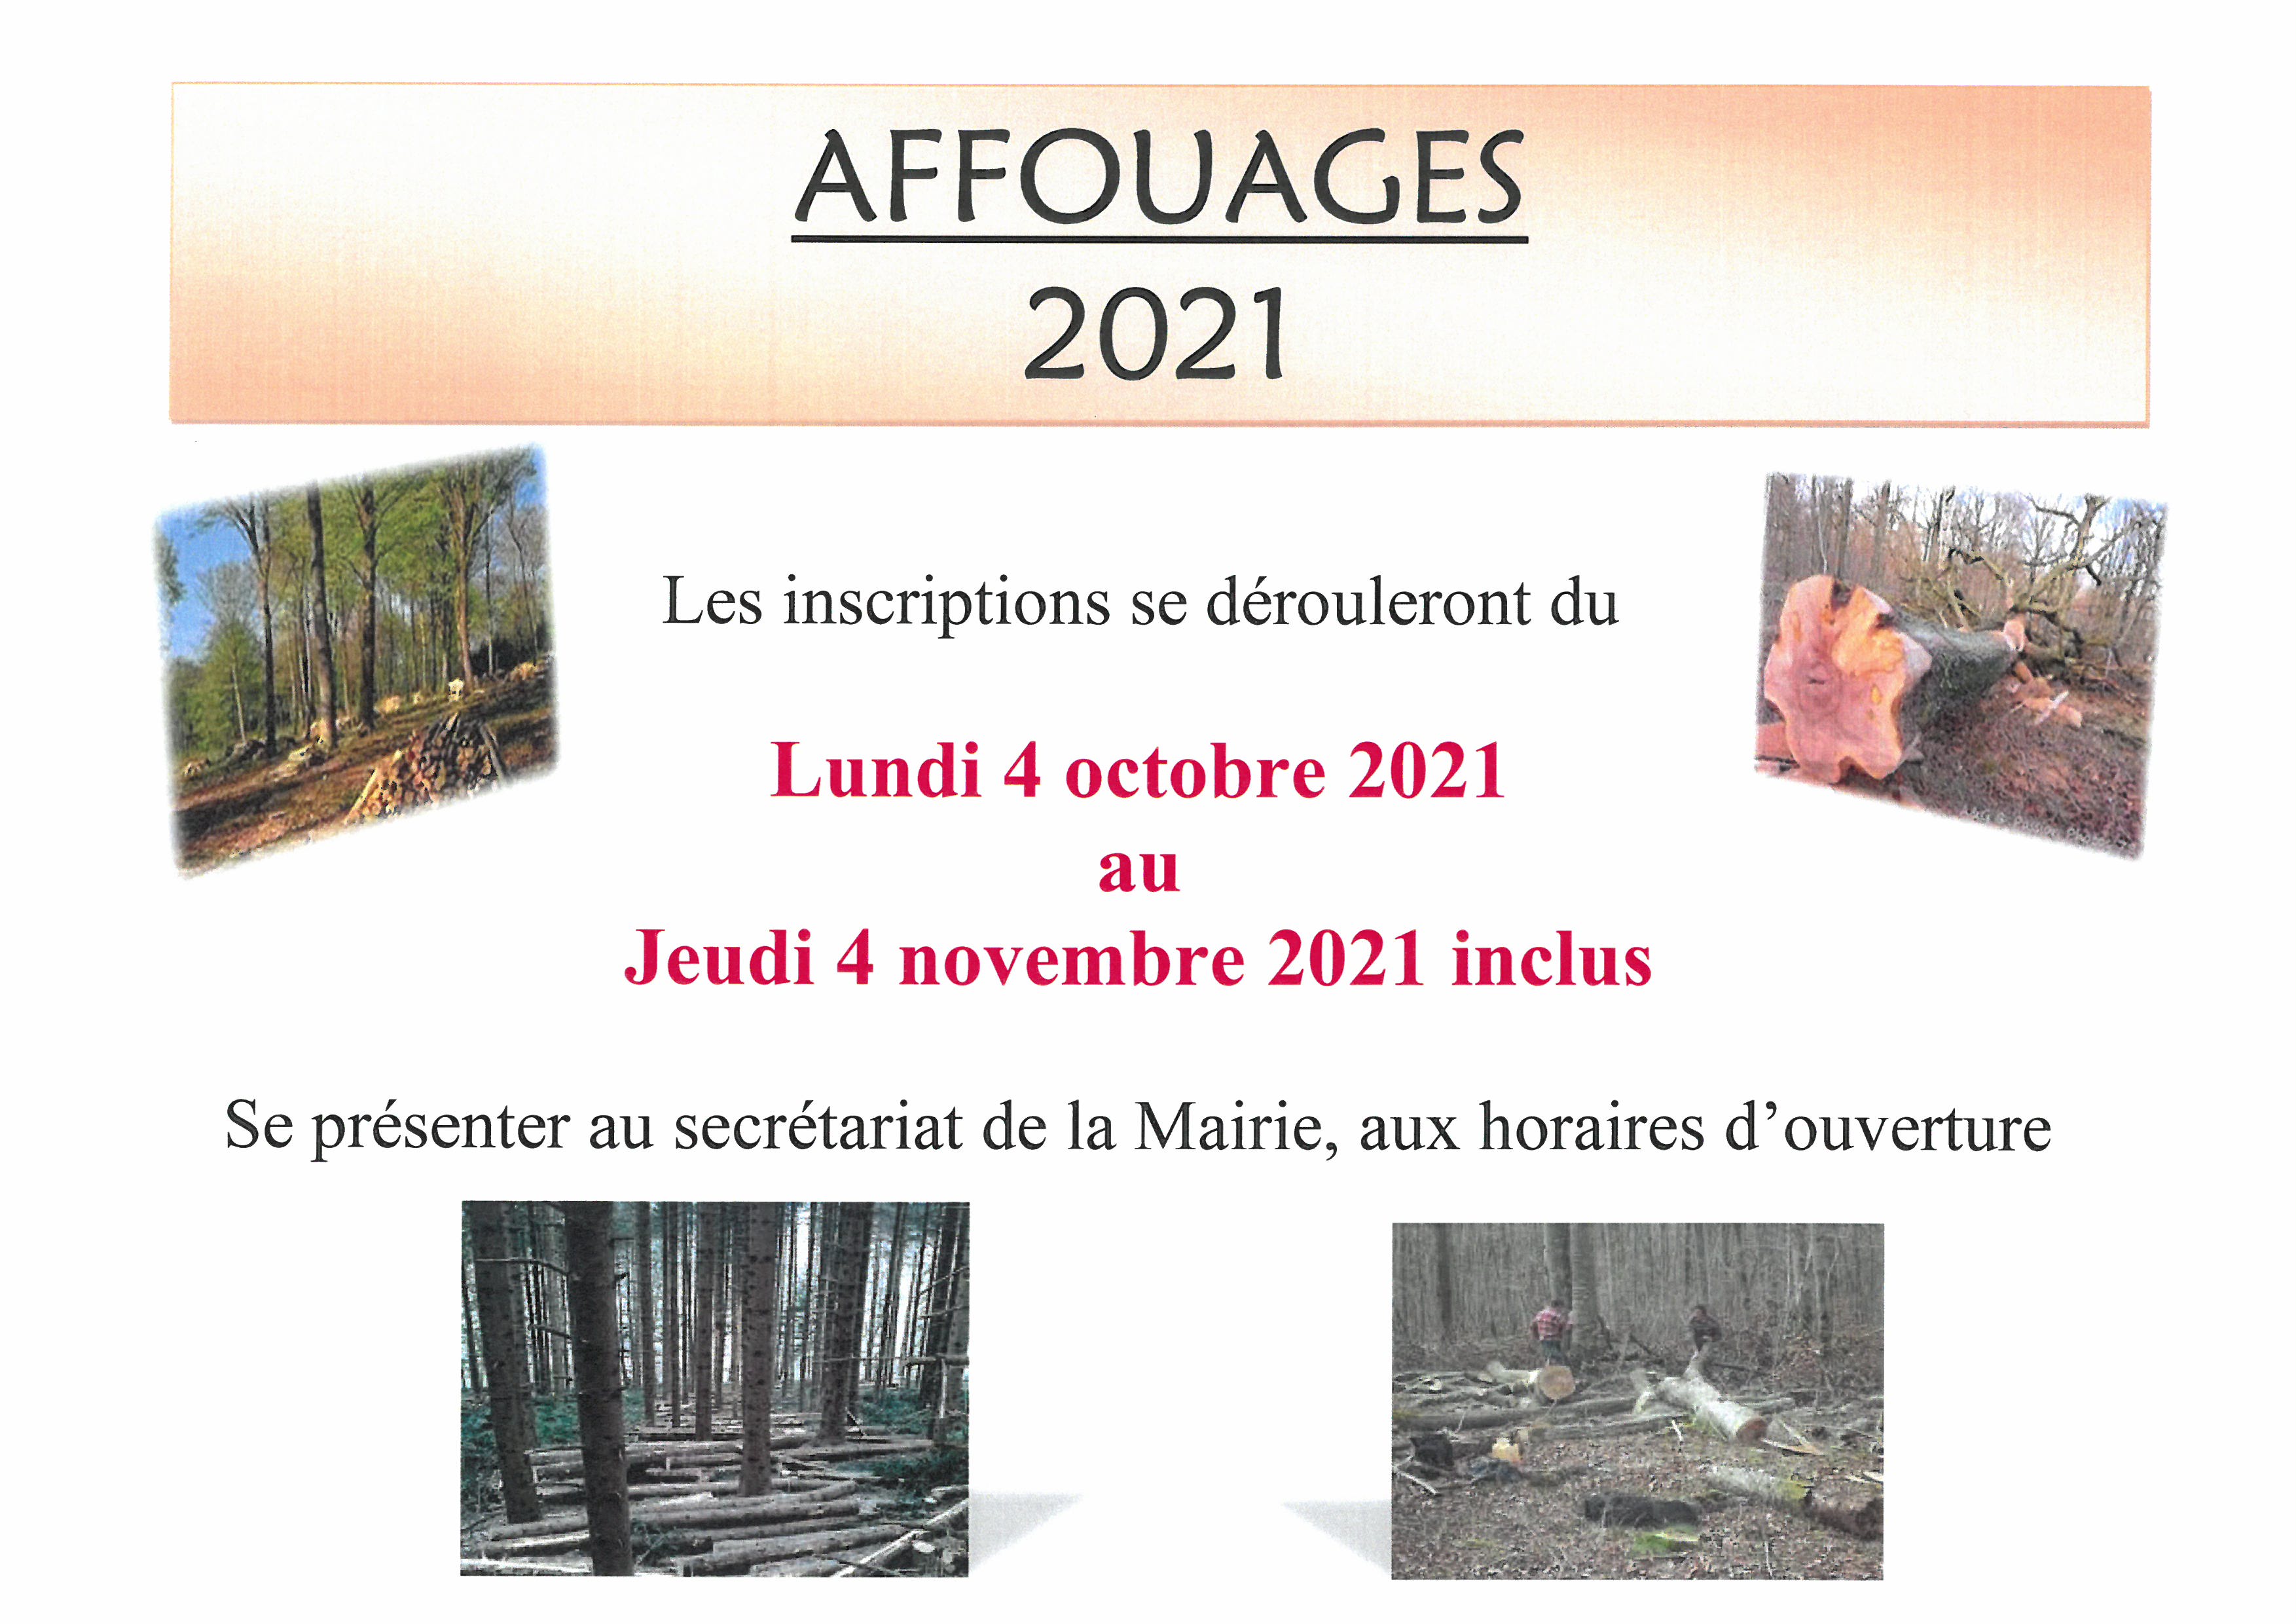 AFFOUAGES 2021